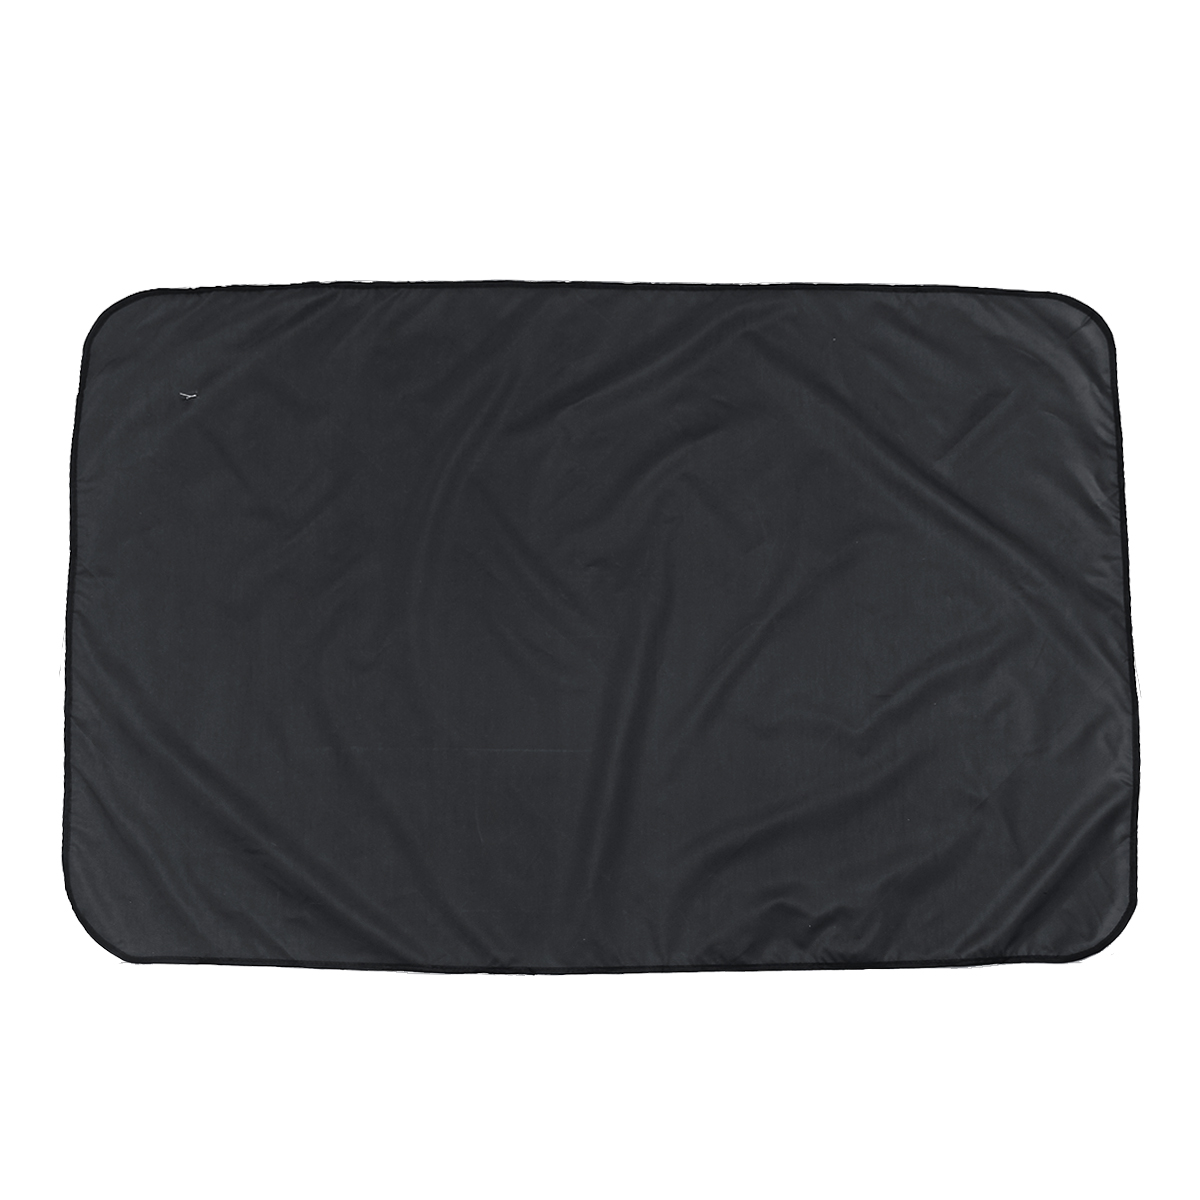 200x150cm-Picnic-Mat-Sleeping-Blanket-Outdoor-Camping-Travel-Waterproof-Beach-Pad-1532100-3